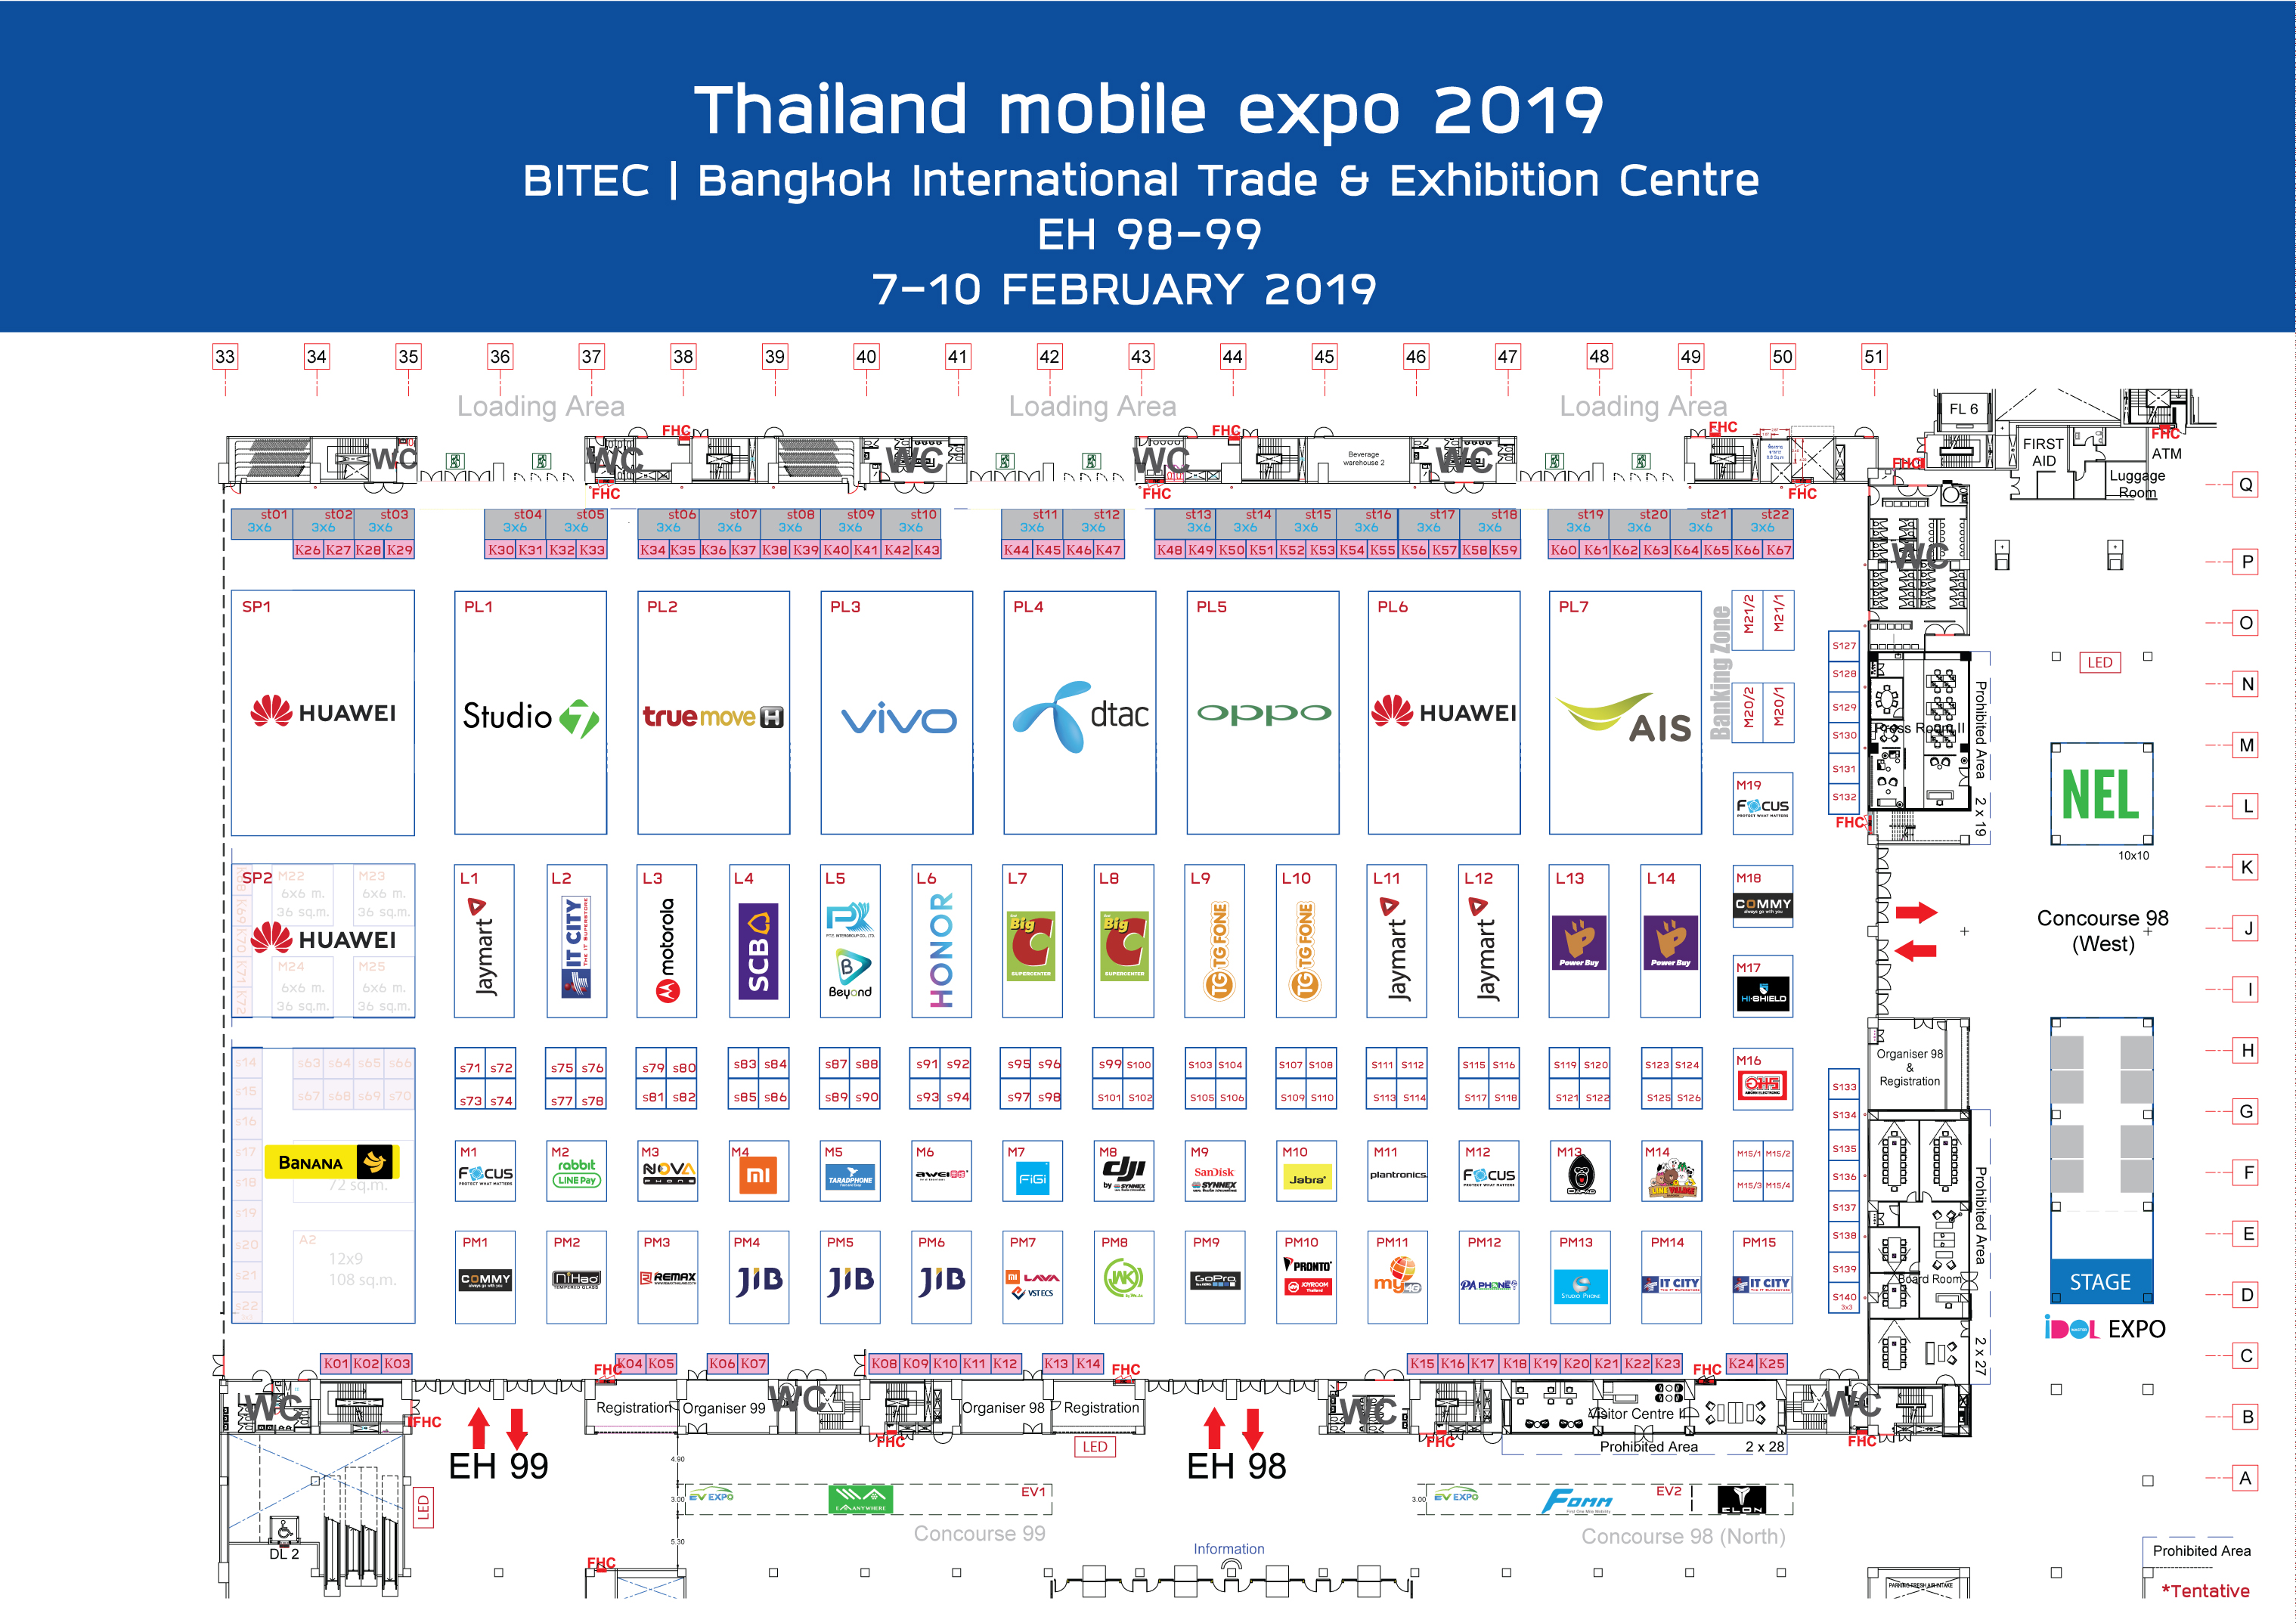 Thailand Mobile Expo 2019 